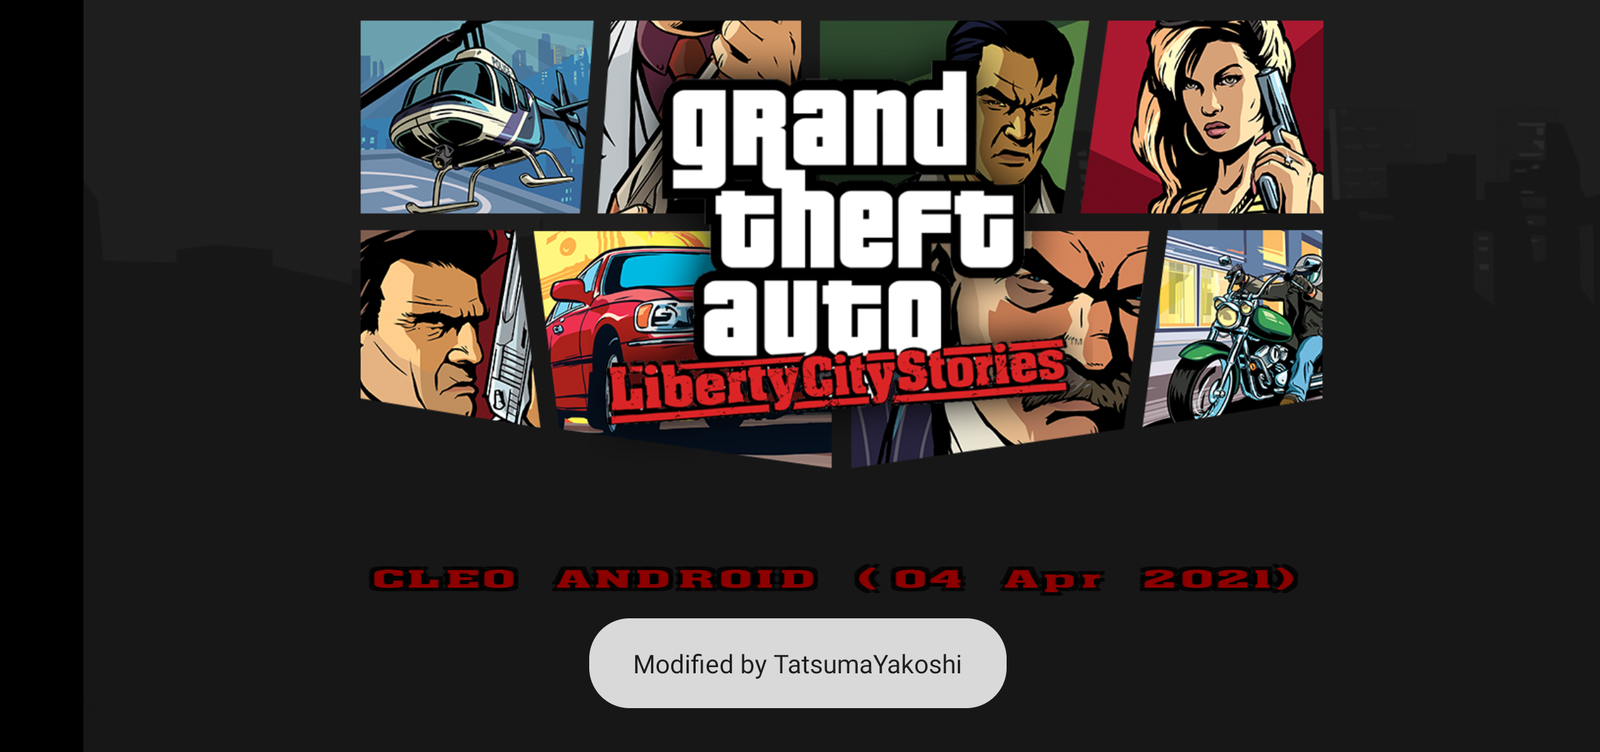 GTA: Liberty City Stories Ver. 2.4 MOD APK, Cleo Mod Menu